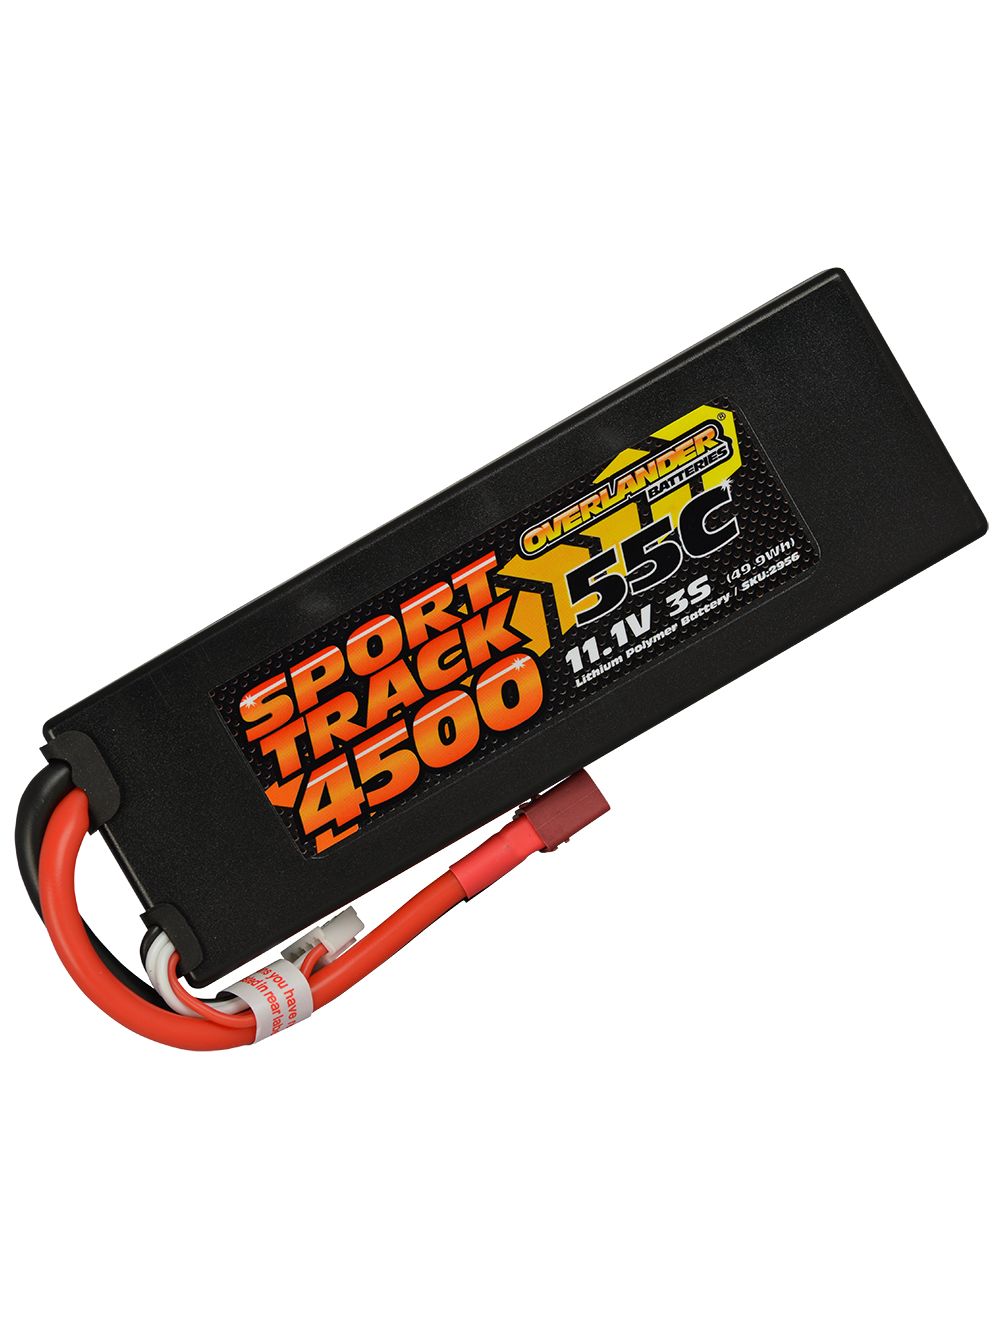 Overlander 4500mAh 11.1V 3S 55C Hard Case Sport Track LiPo Battery - No Connector 2956